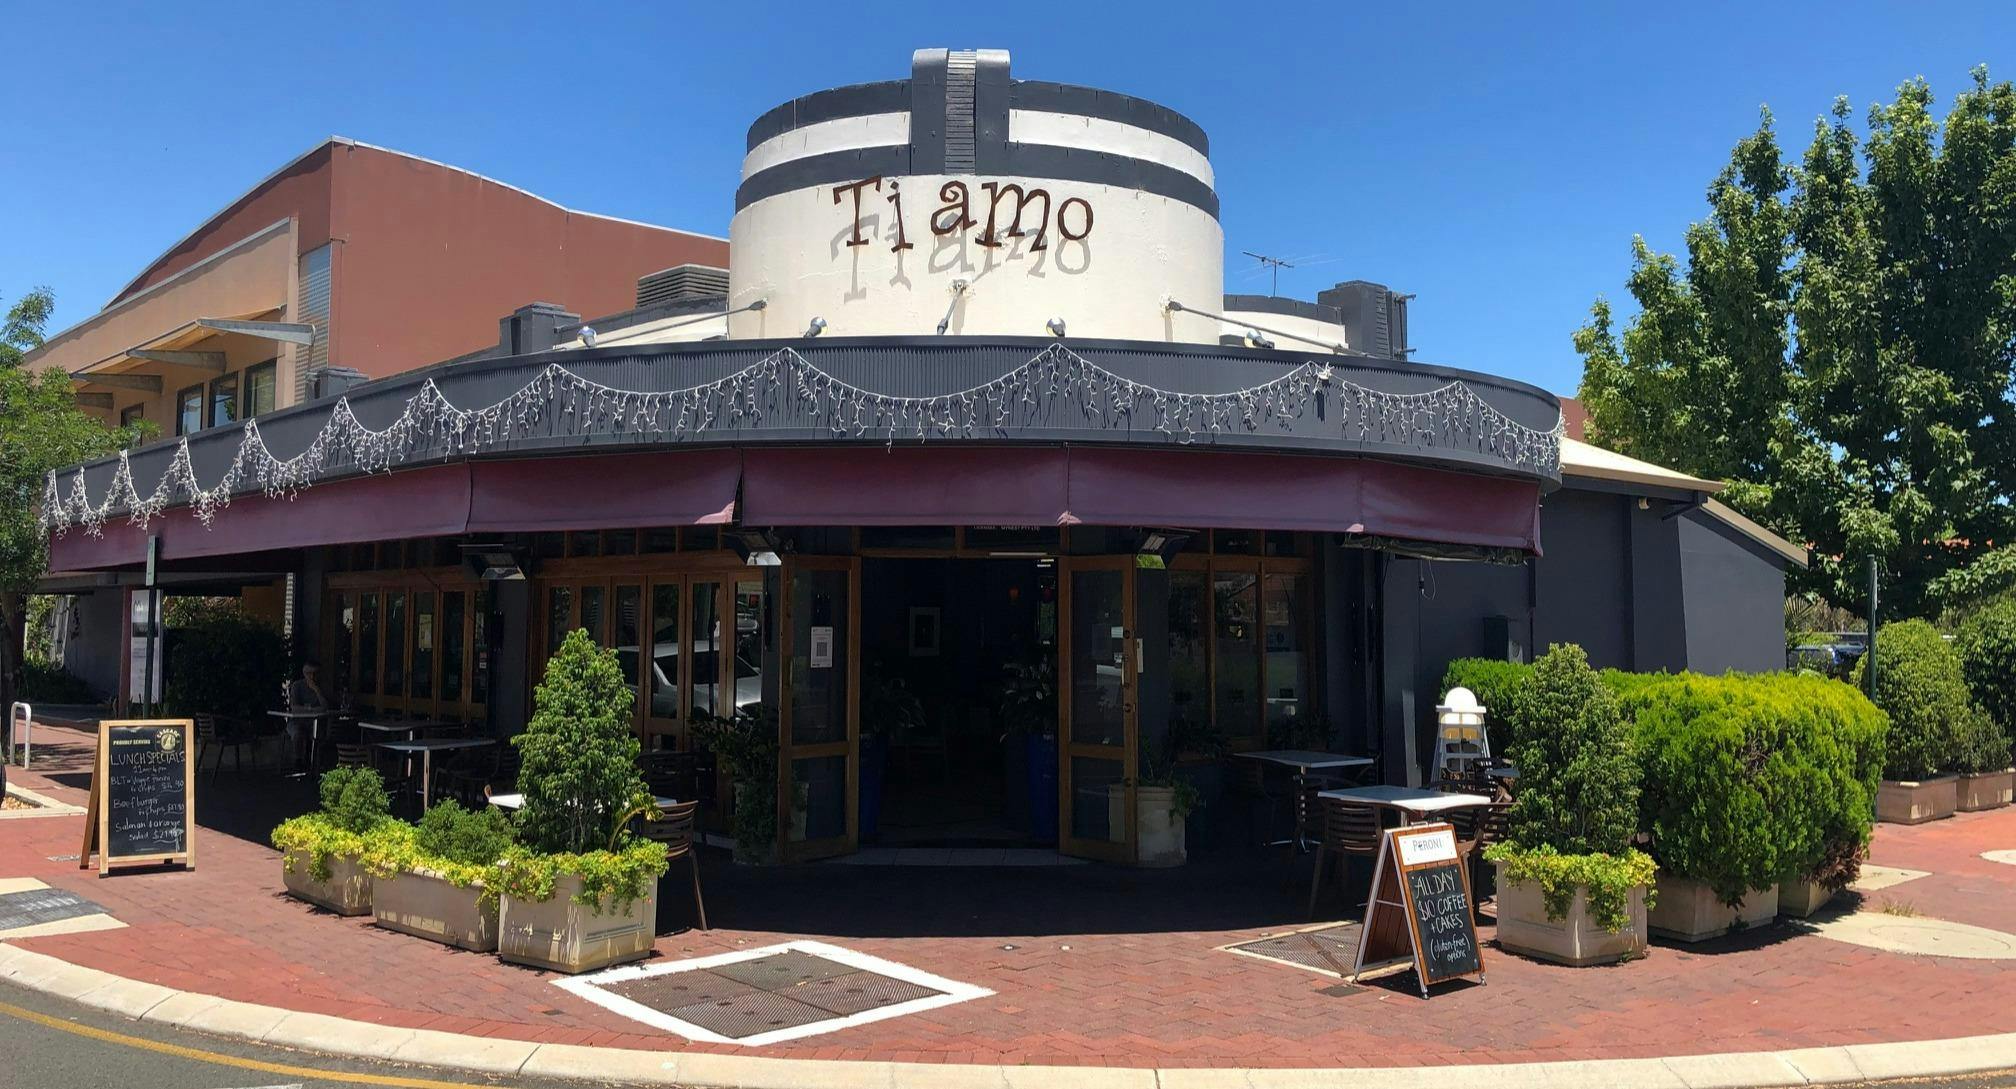 Photo of restaurant Tiamo Cafe in Nedlands, Perth